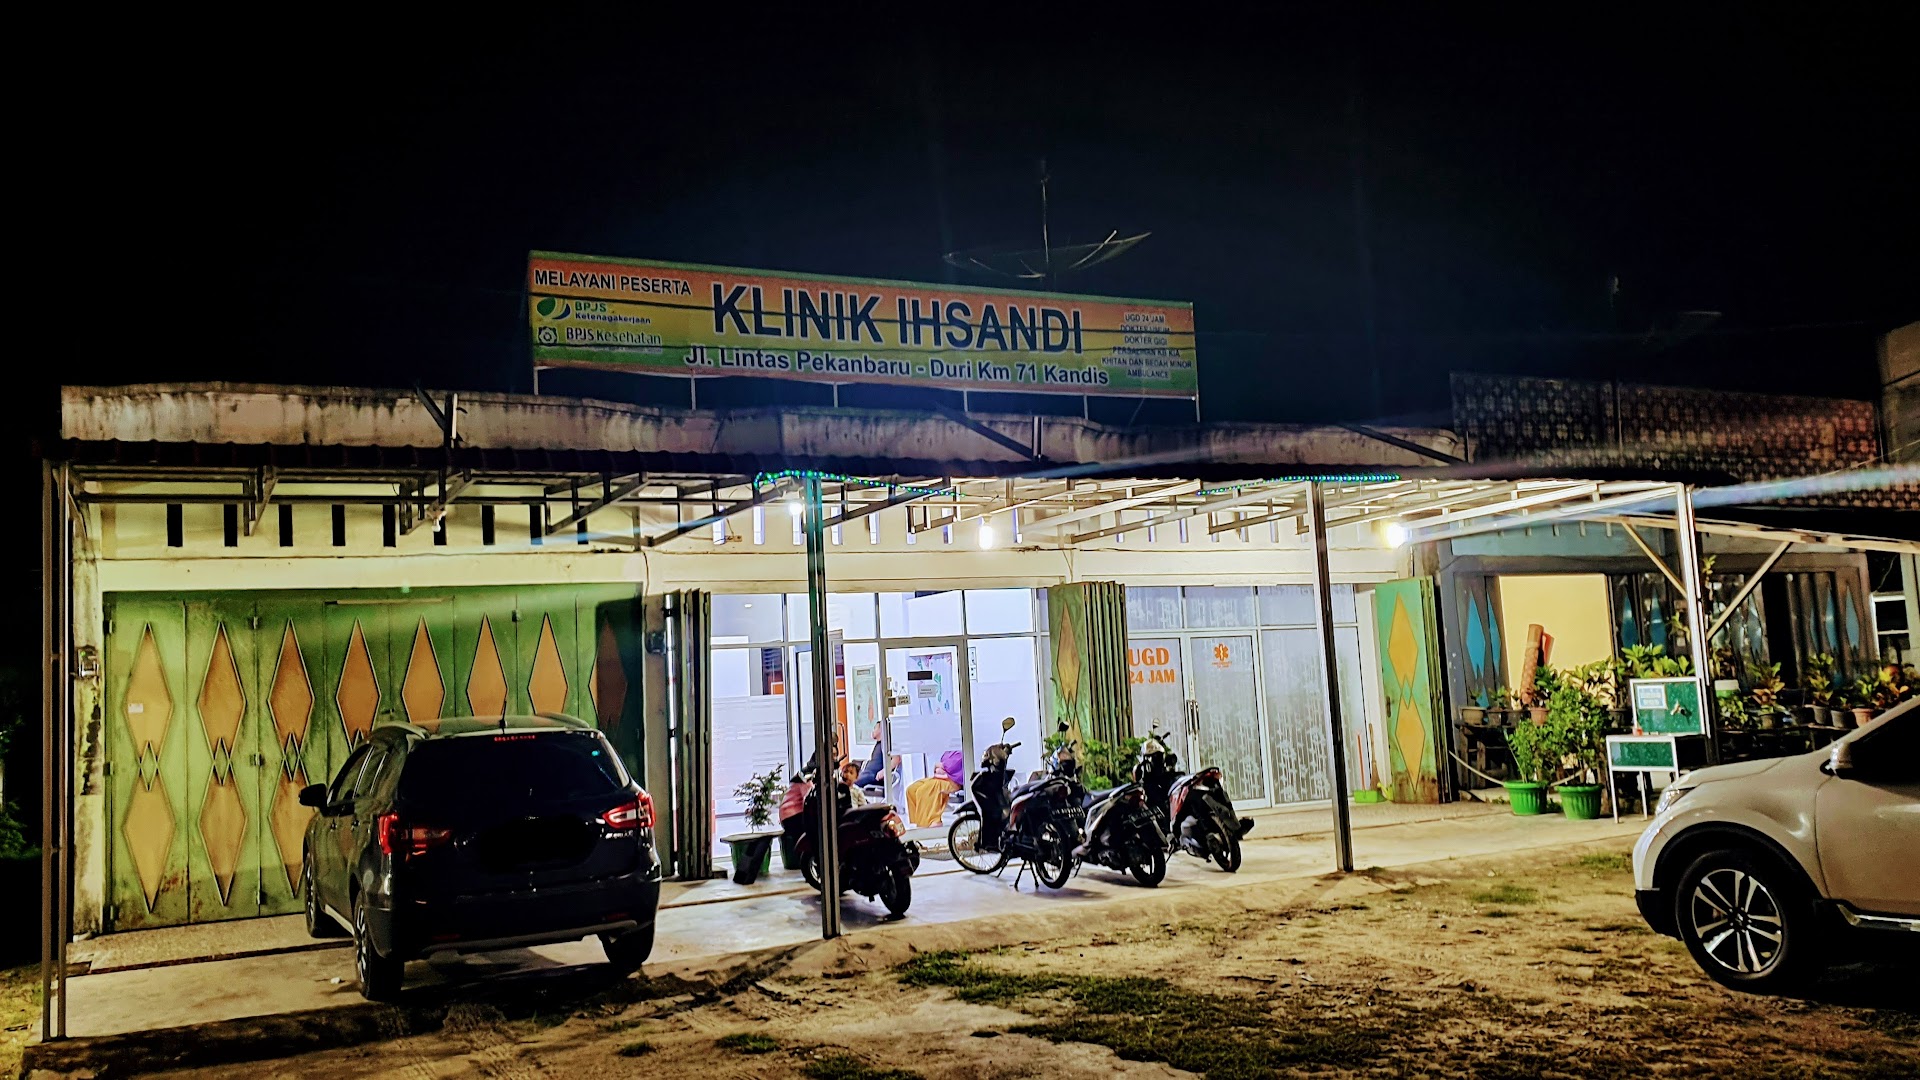 Klinik Ihsandi Photo